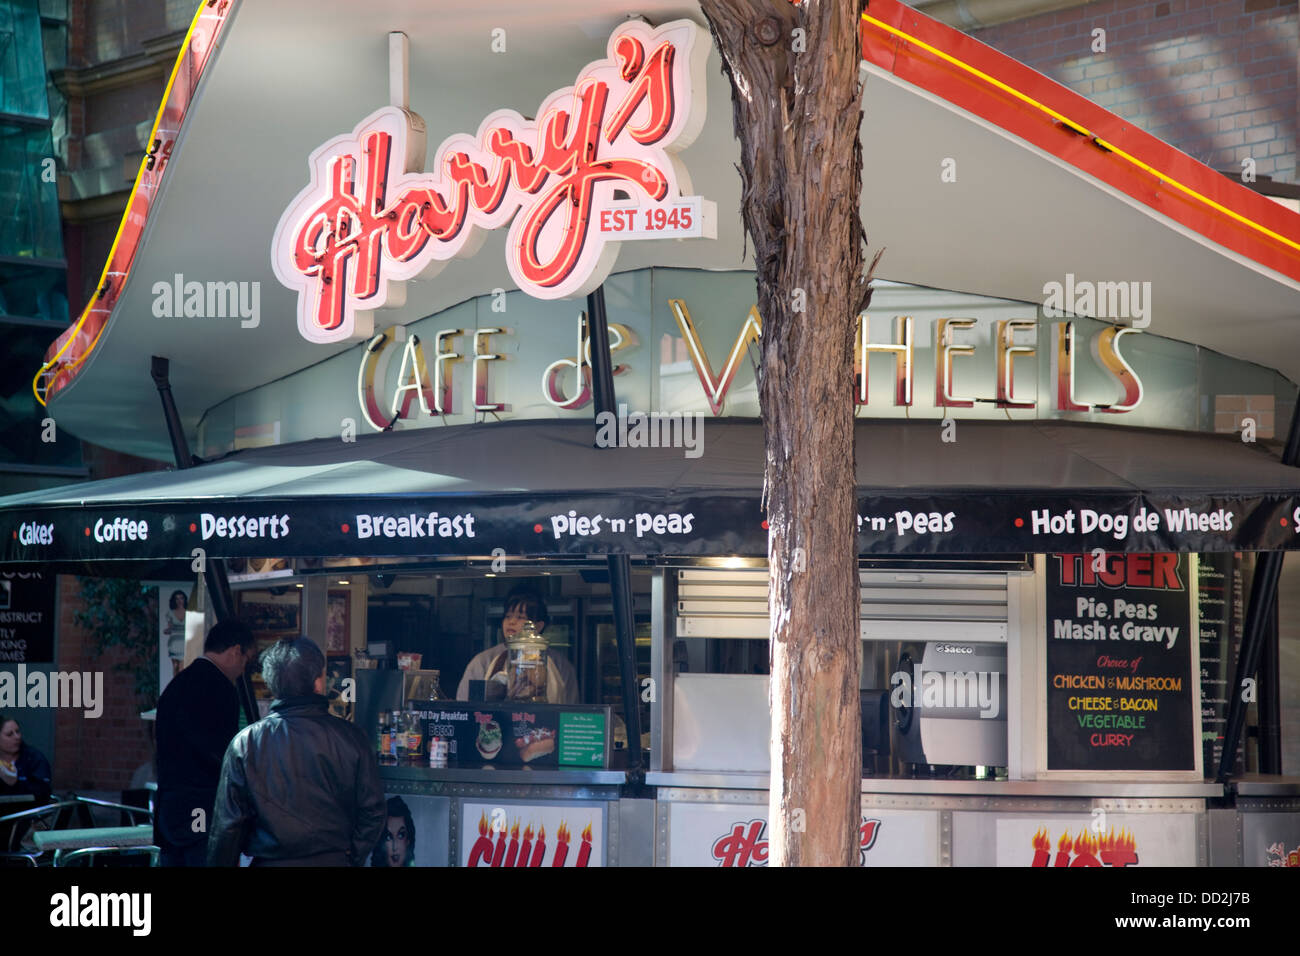 iconic harrys cafe de wheels restaurant cafe Stock Photo - Alamy